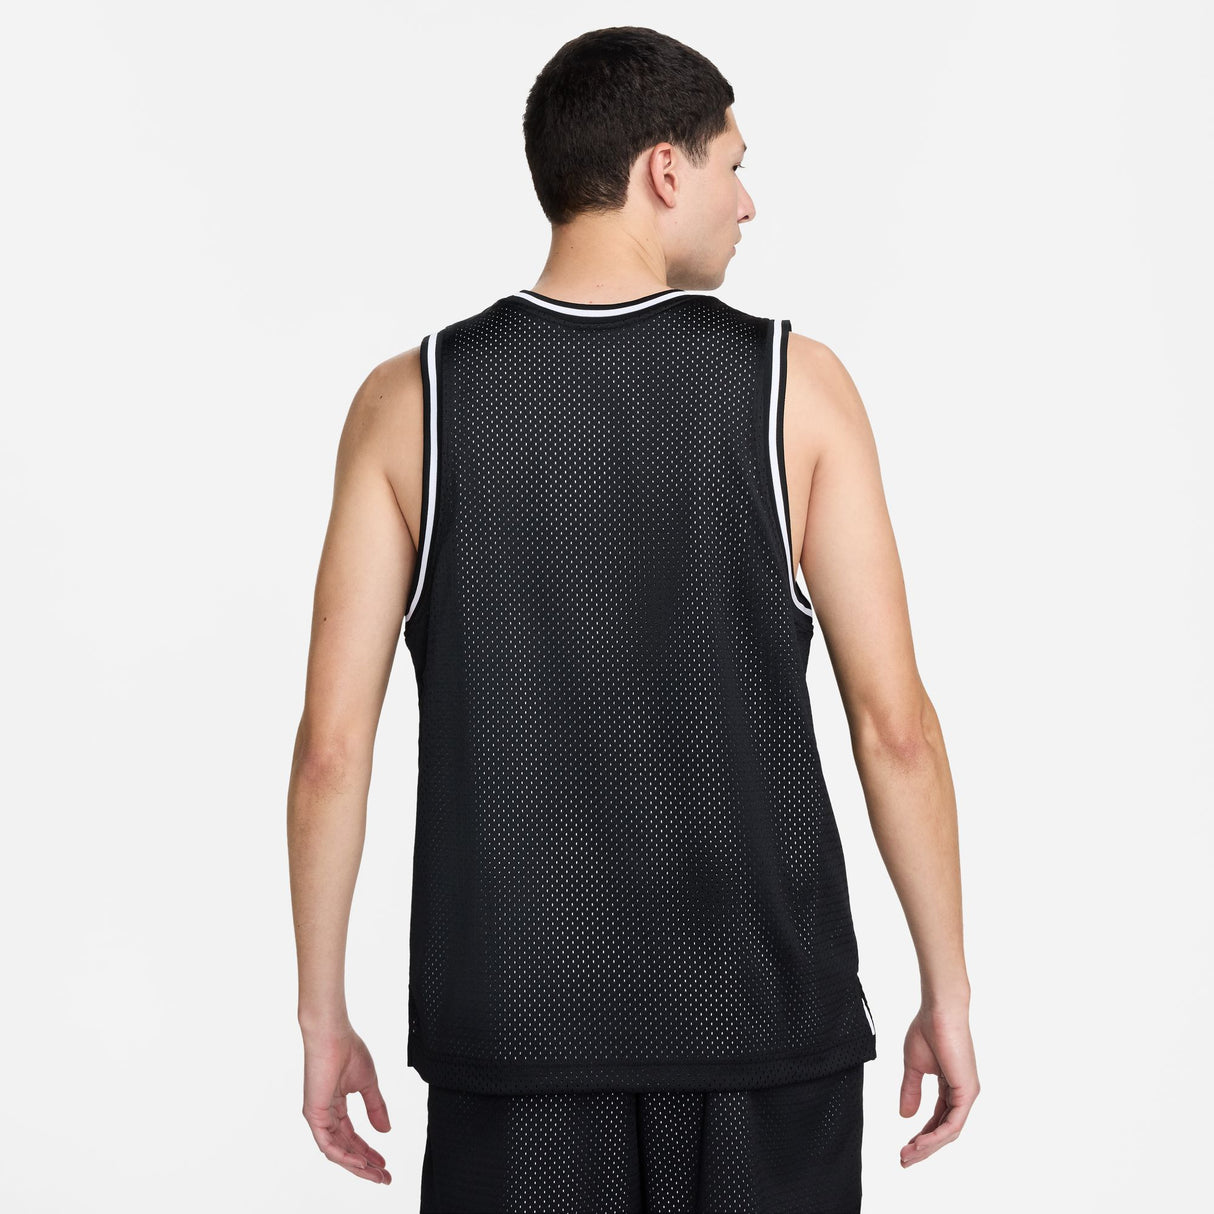 Nike SB Black/White Reversible Basketball Jersey